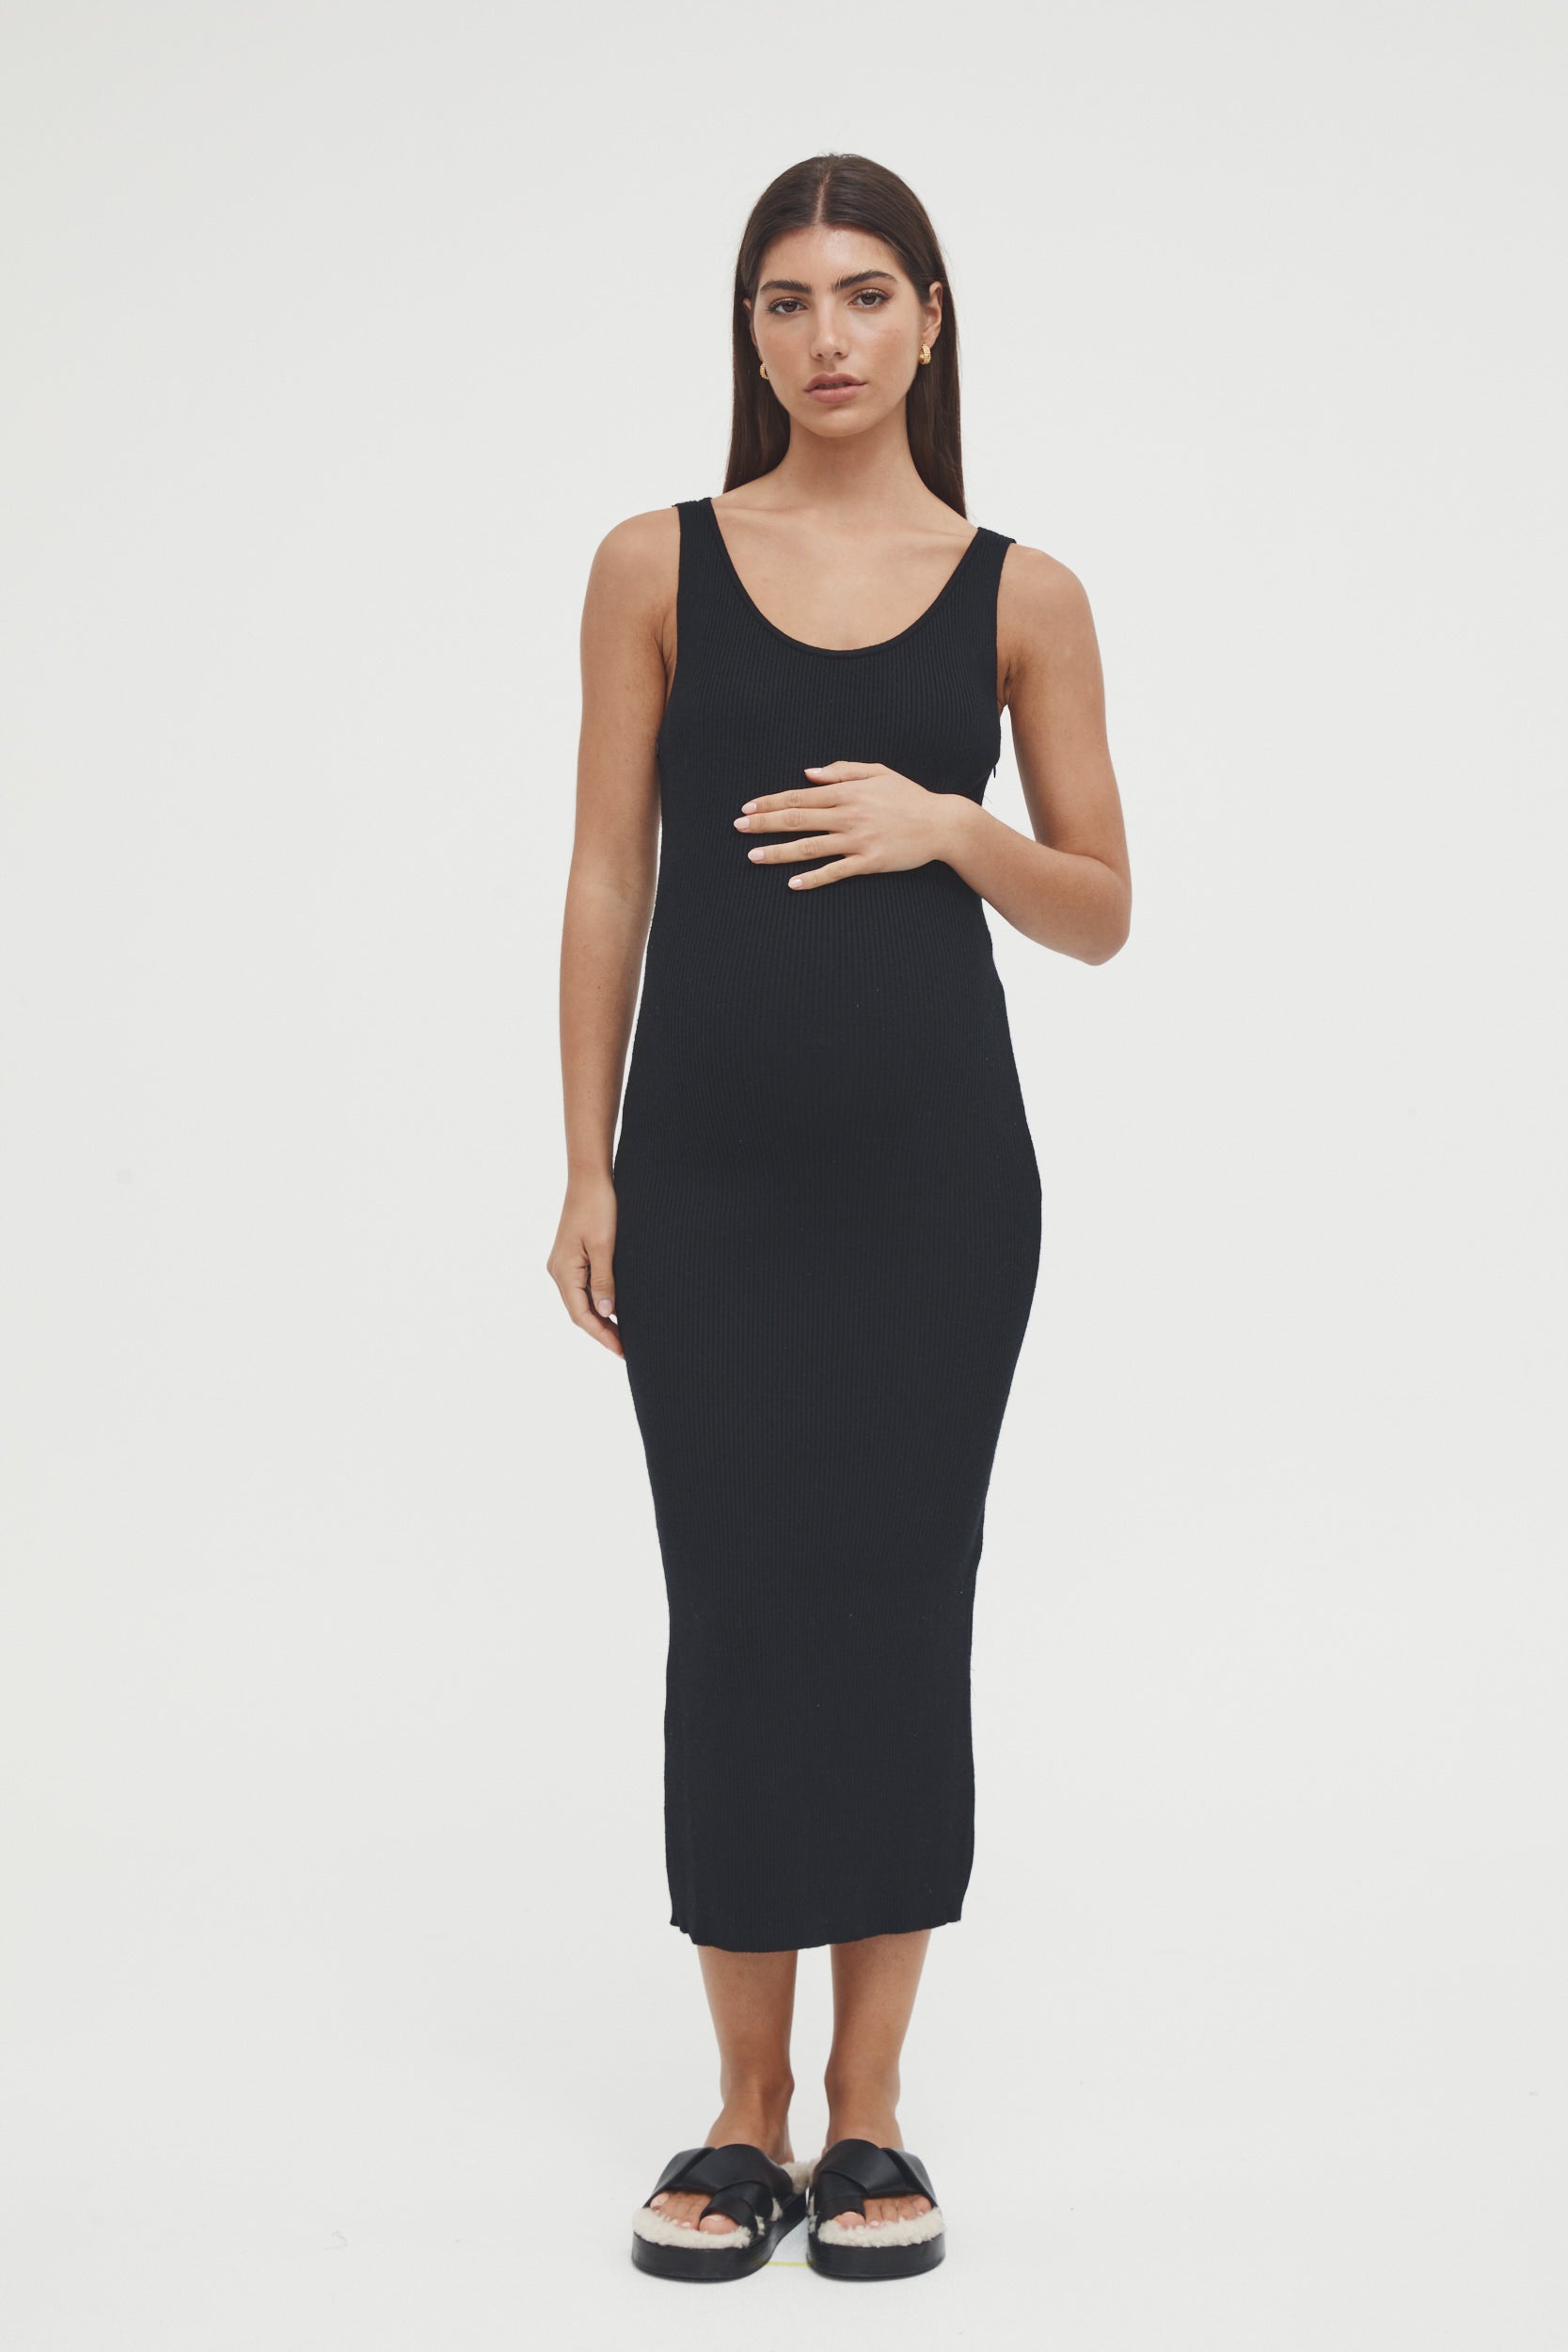 Stretchy Rib Knit Maternity Dress (Black) 1